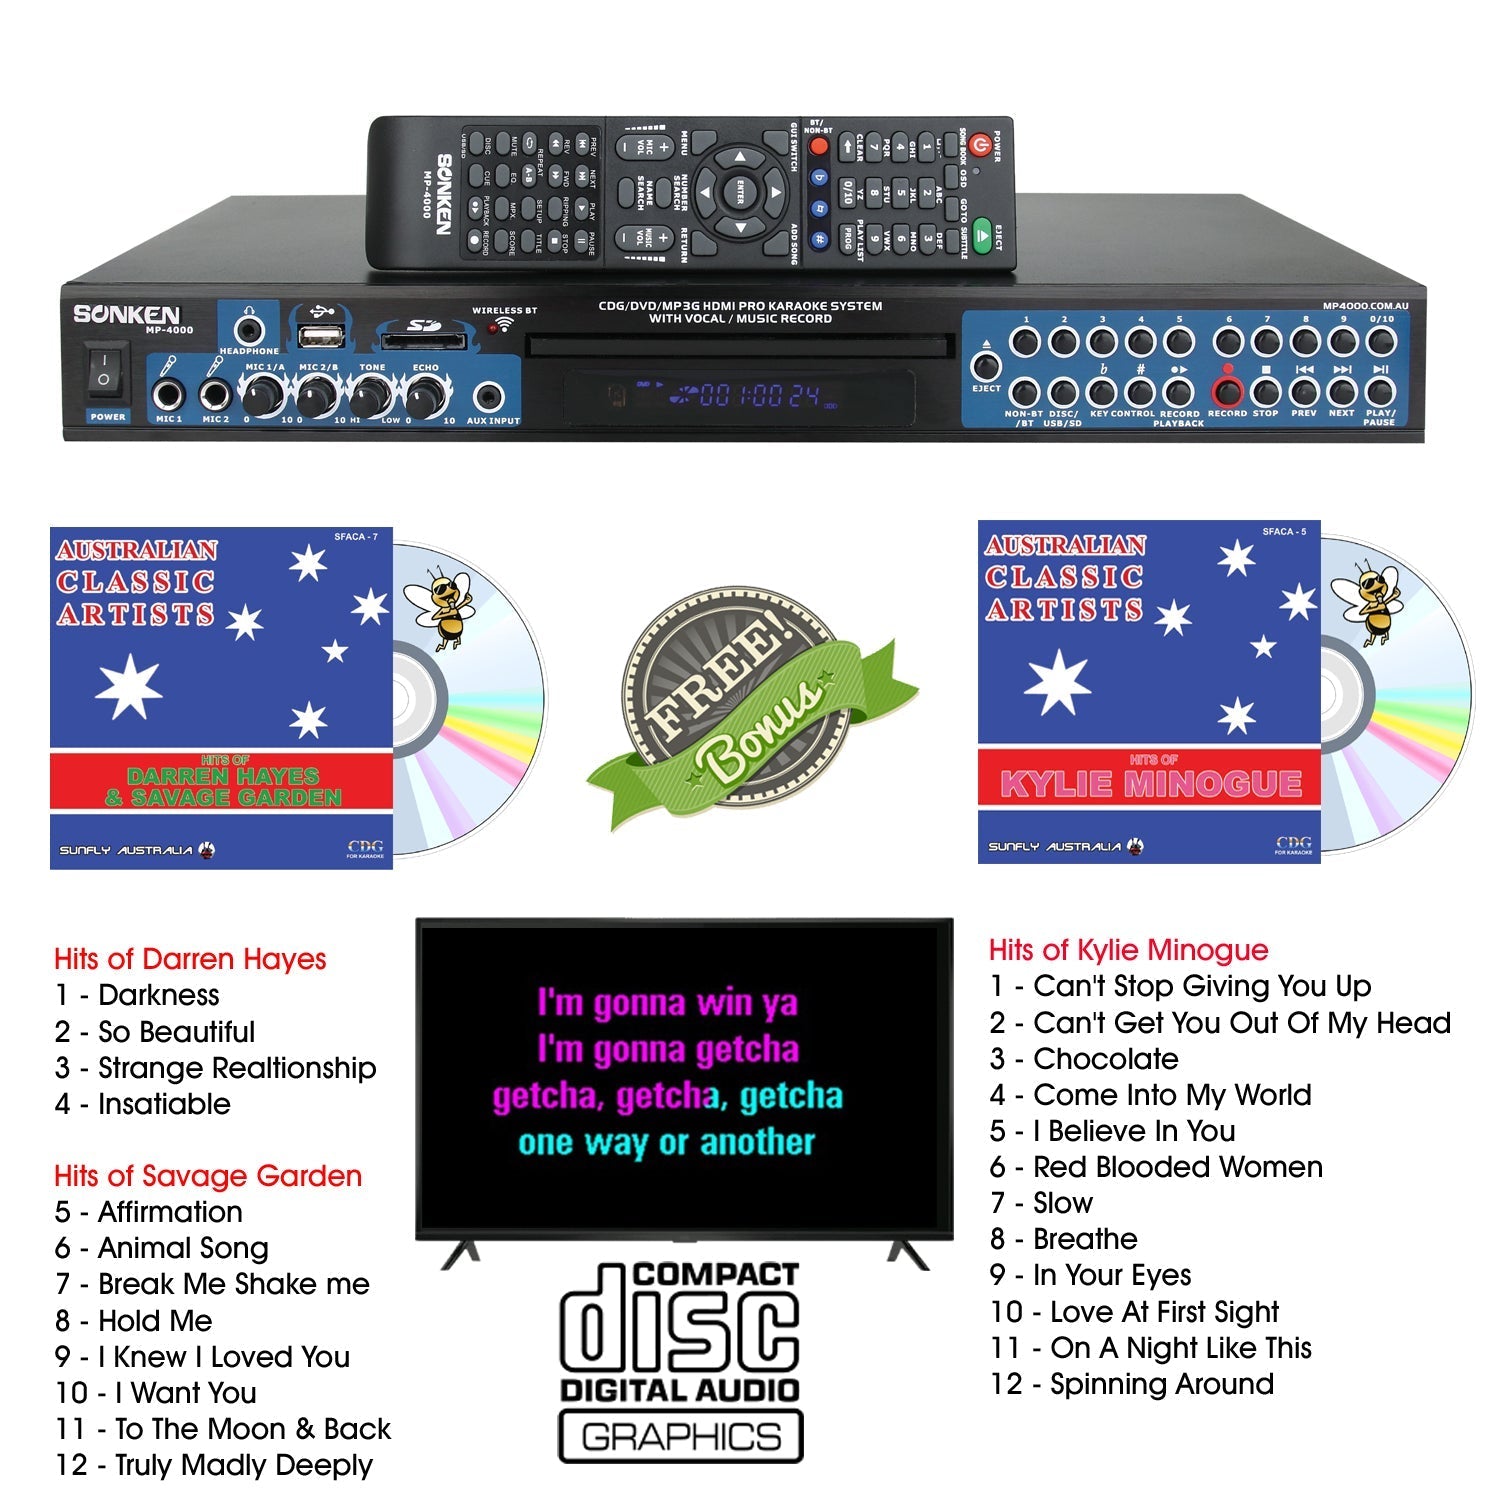 Sonken Home Karaoke Studio Package Deal (KA-13 Amp/CS-450 Speakers/WM-800D Wireless Mics/MP-4000 Karaoke Machine) - Karaoke Home Entertainment